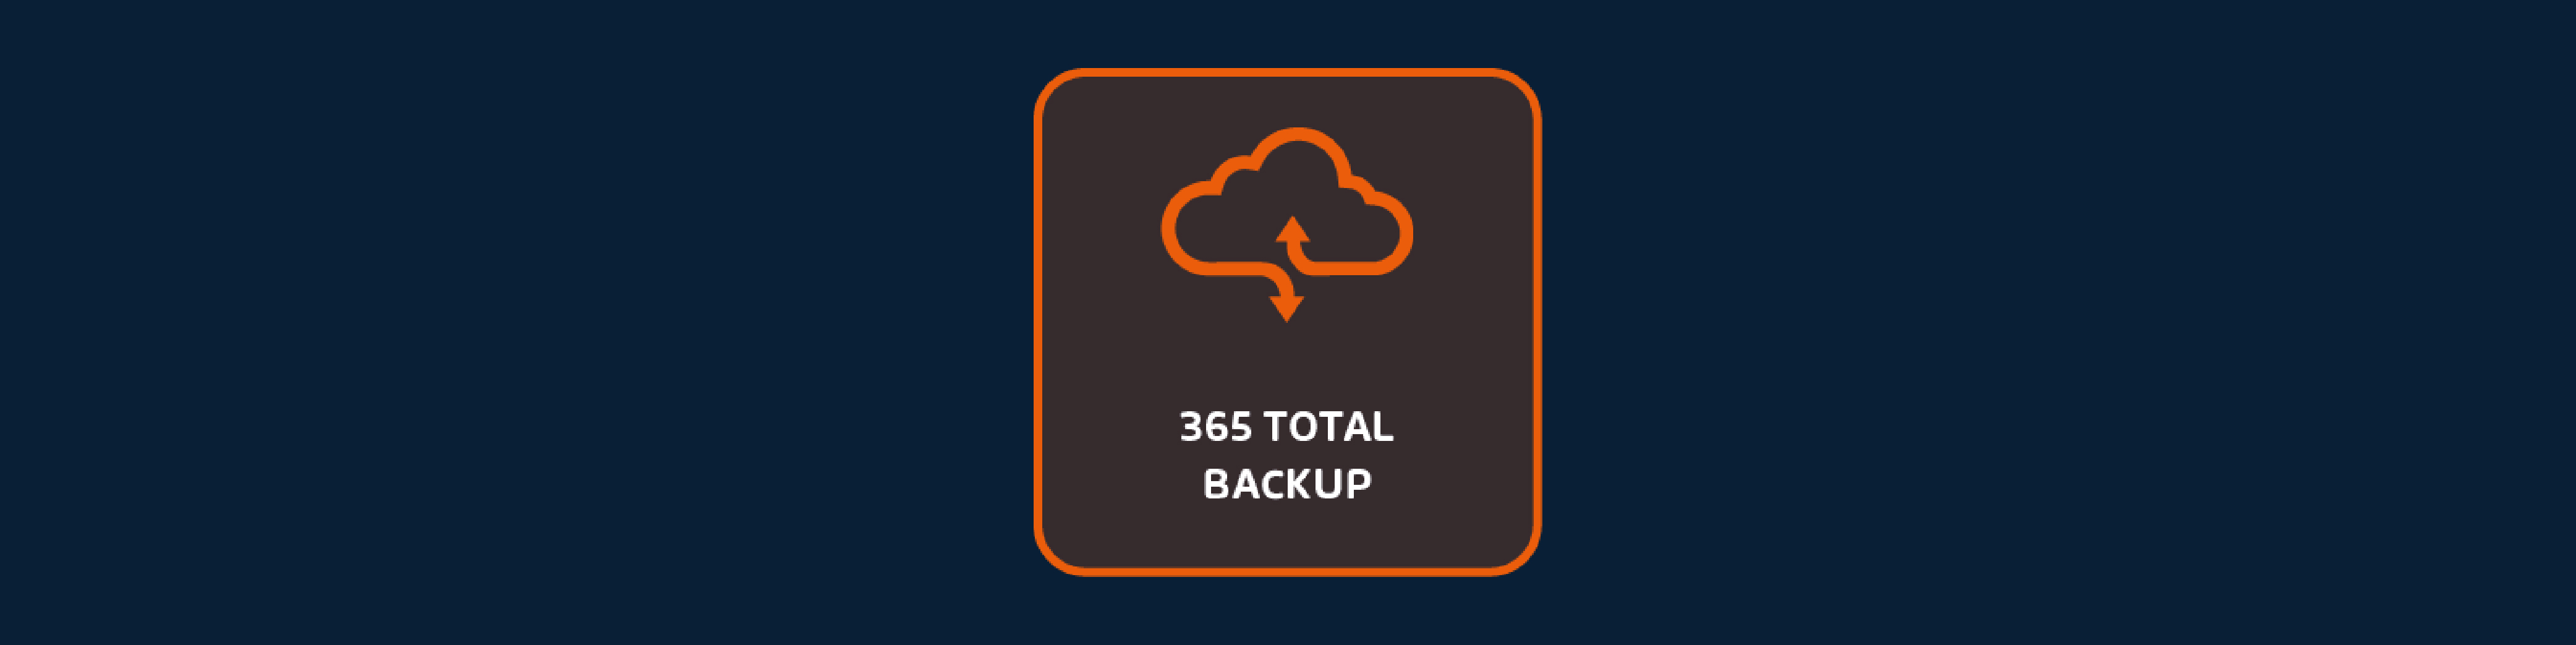 365_total_backup-1.jpg